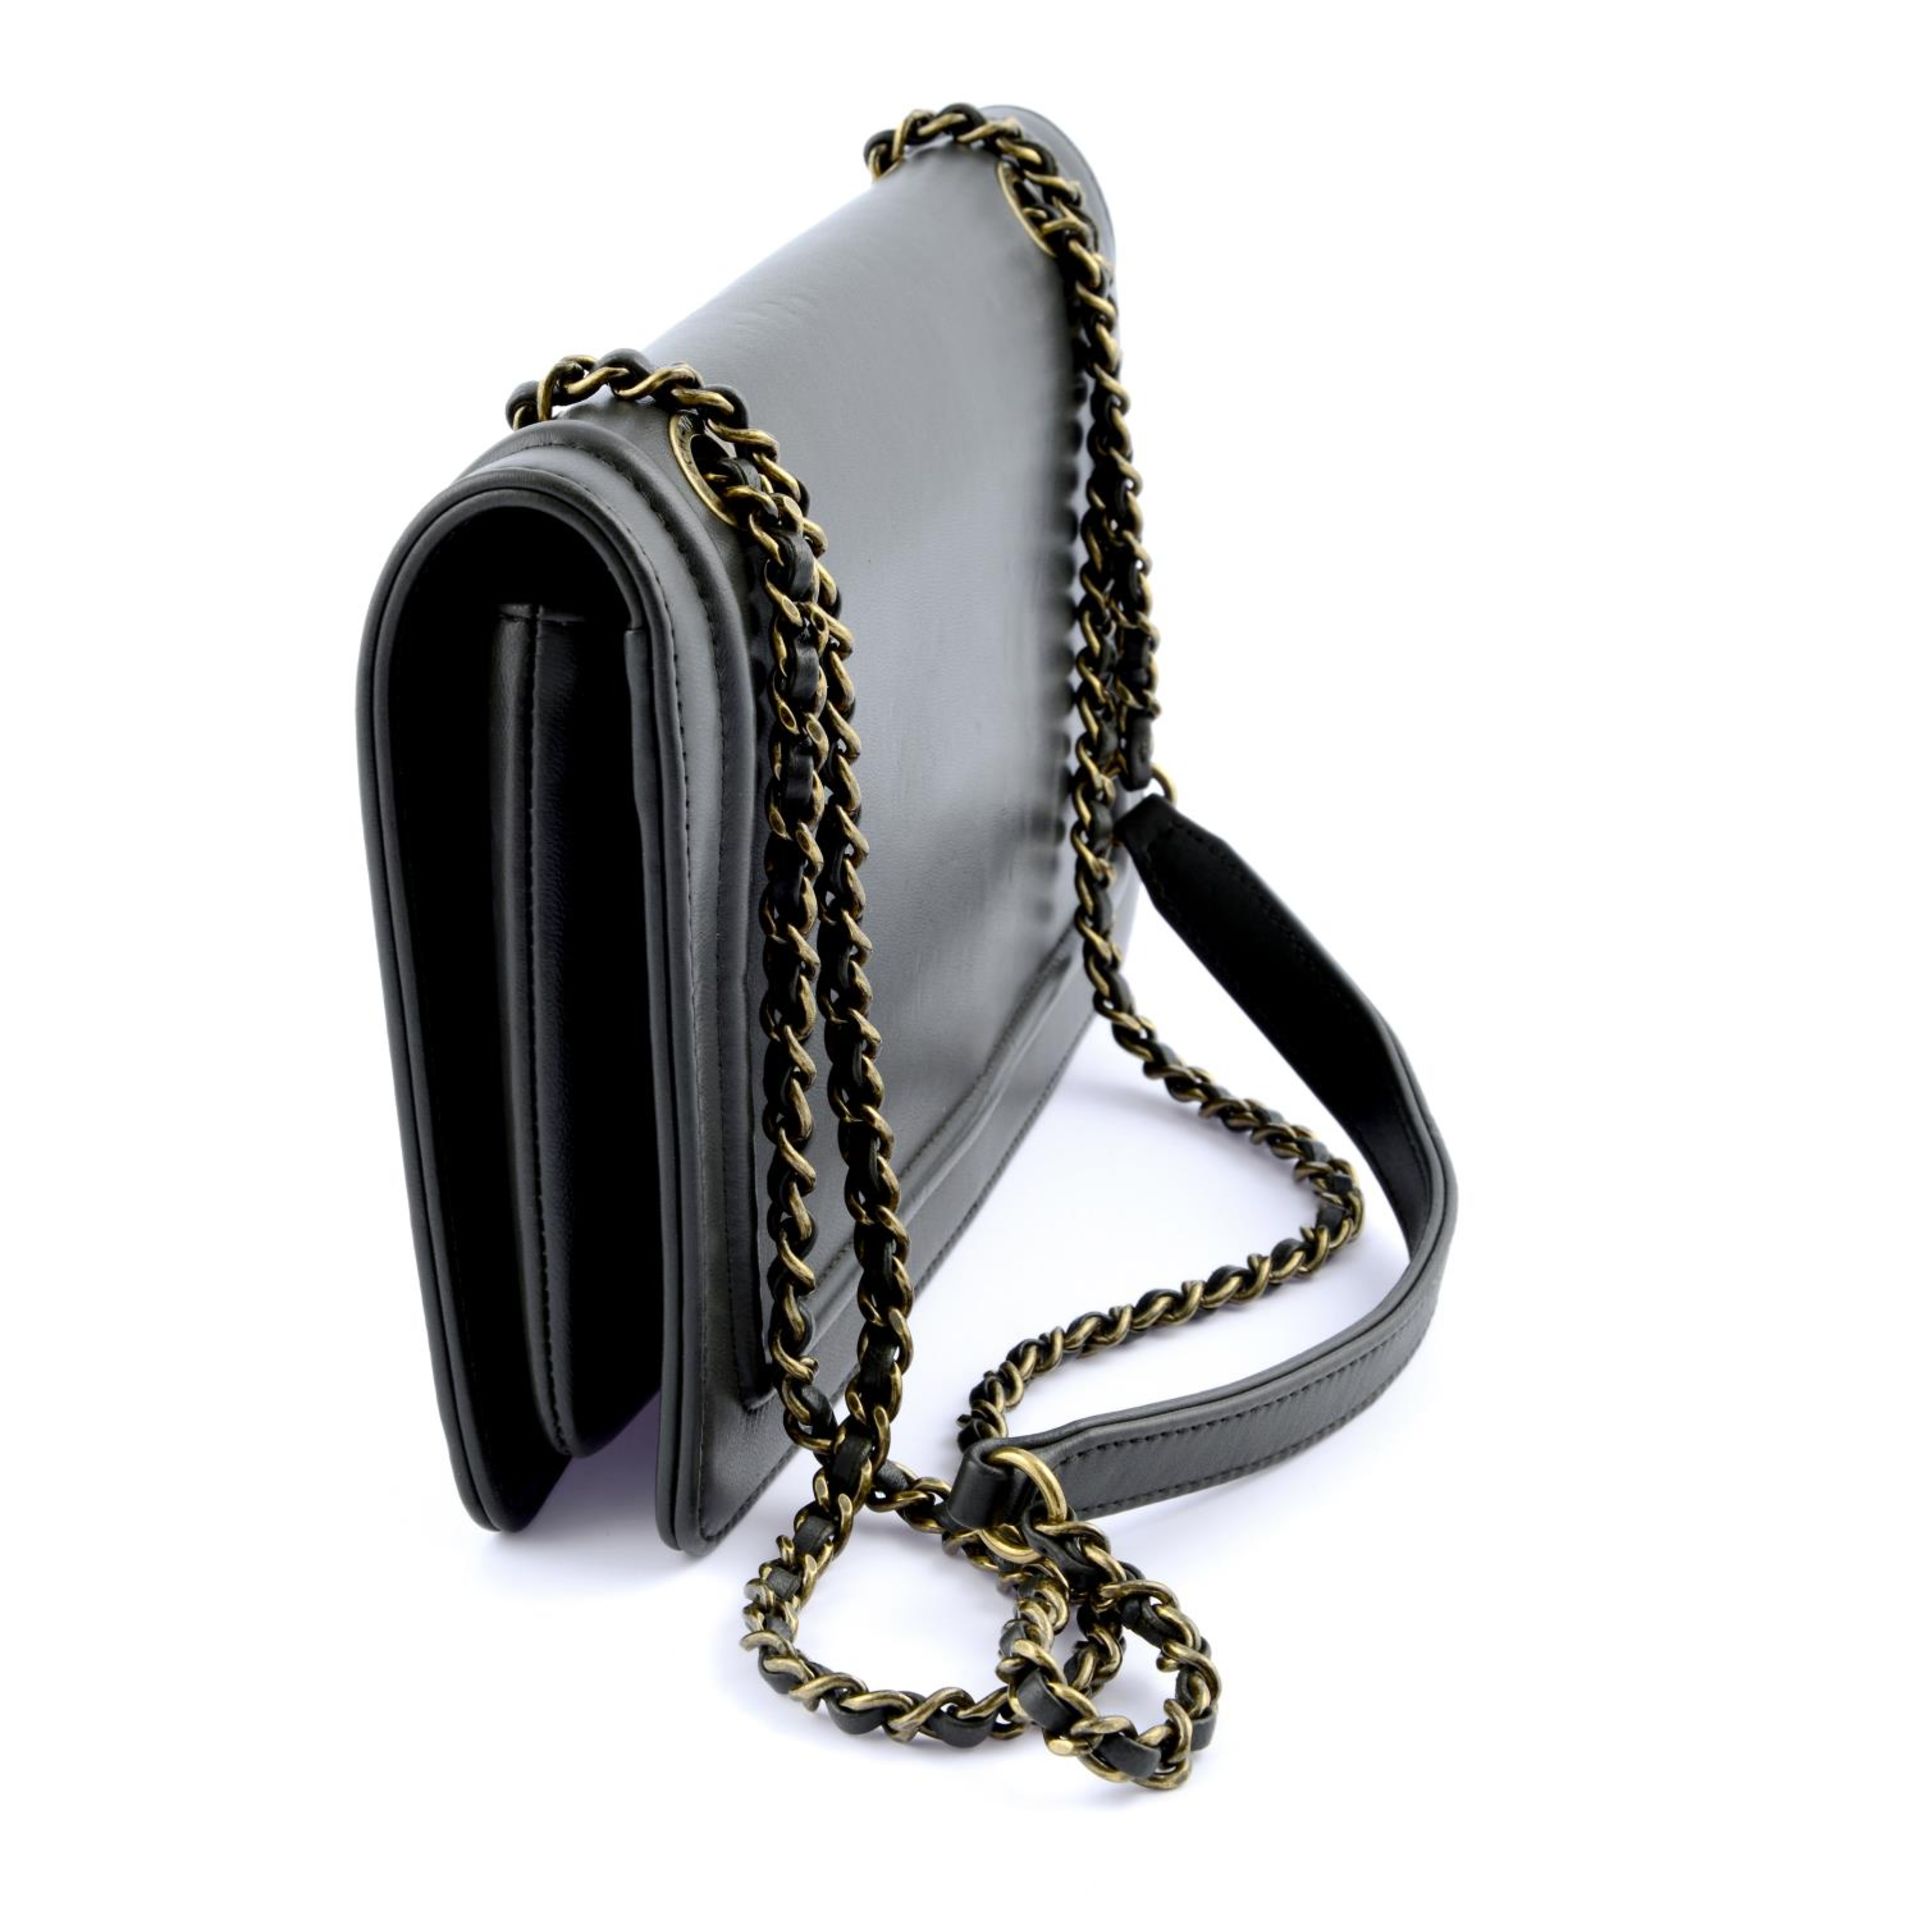 CHANEL - a mixed metal CC Flap handbag. - Image 3 of 6